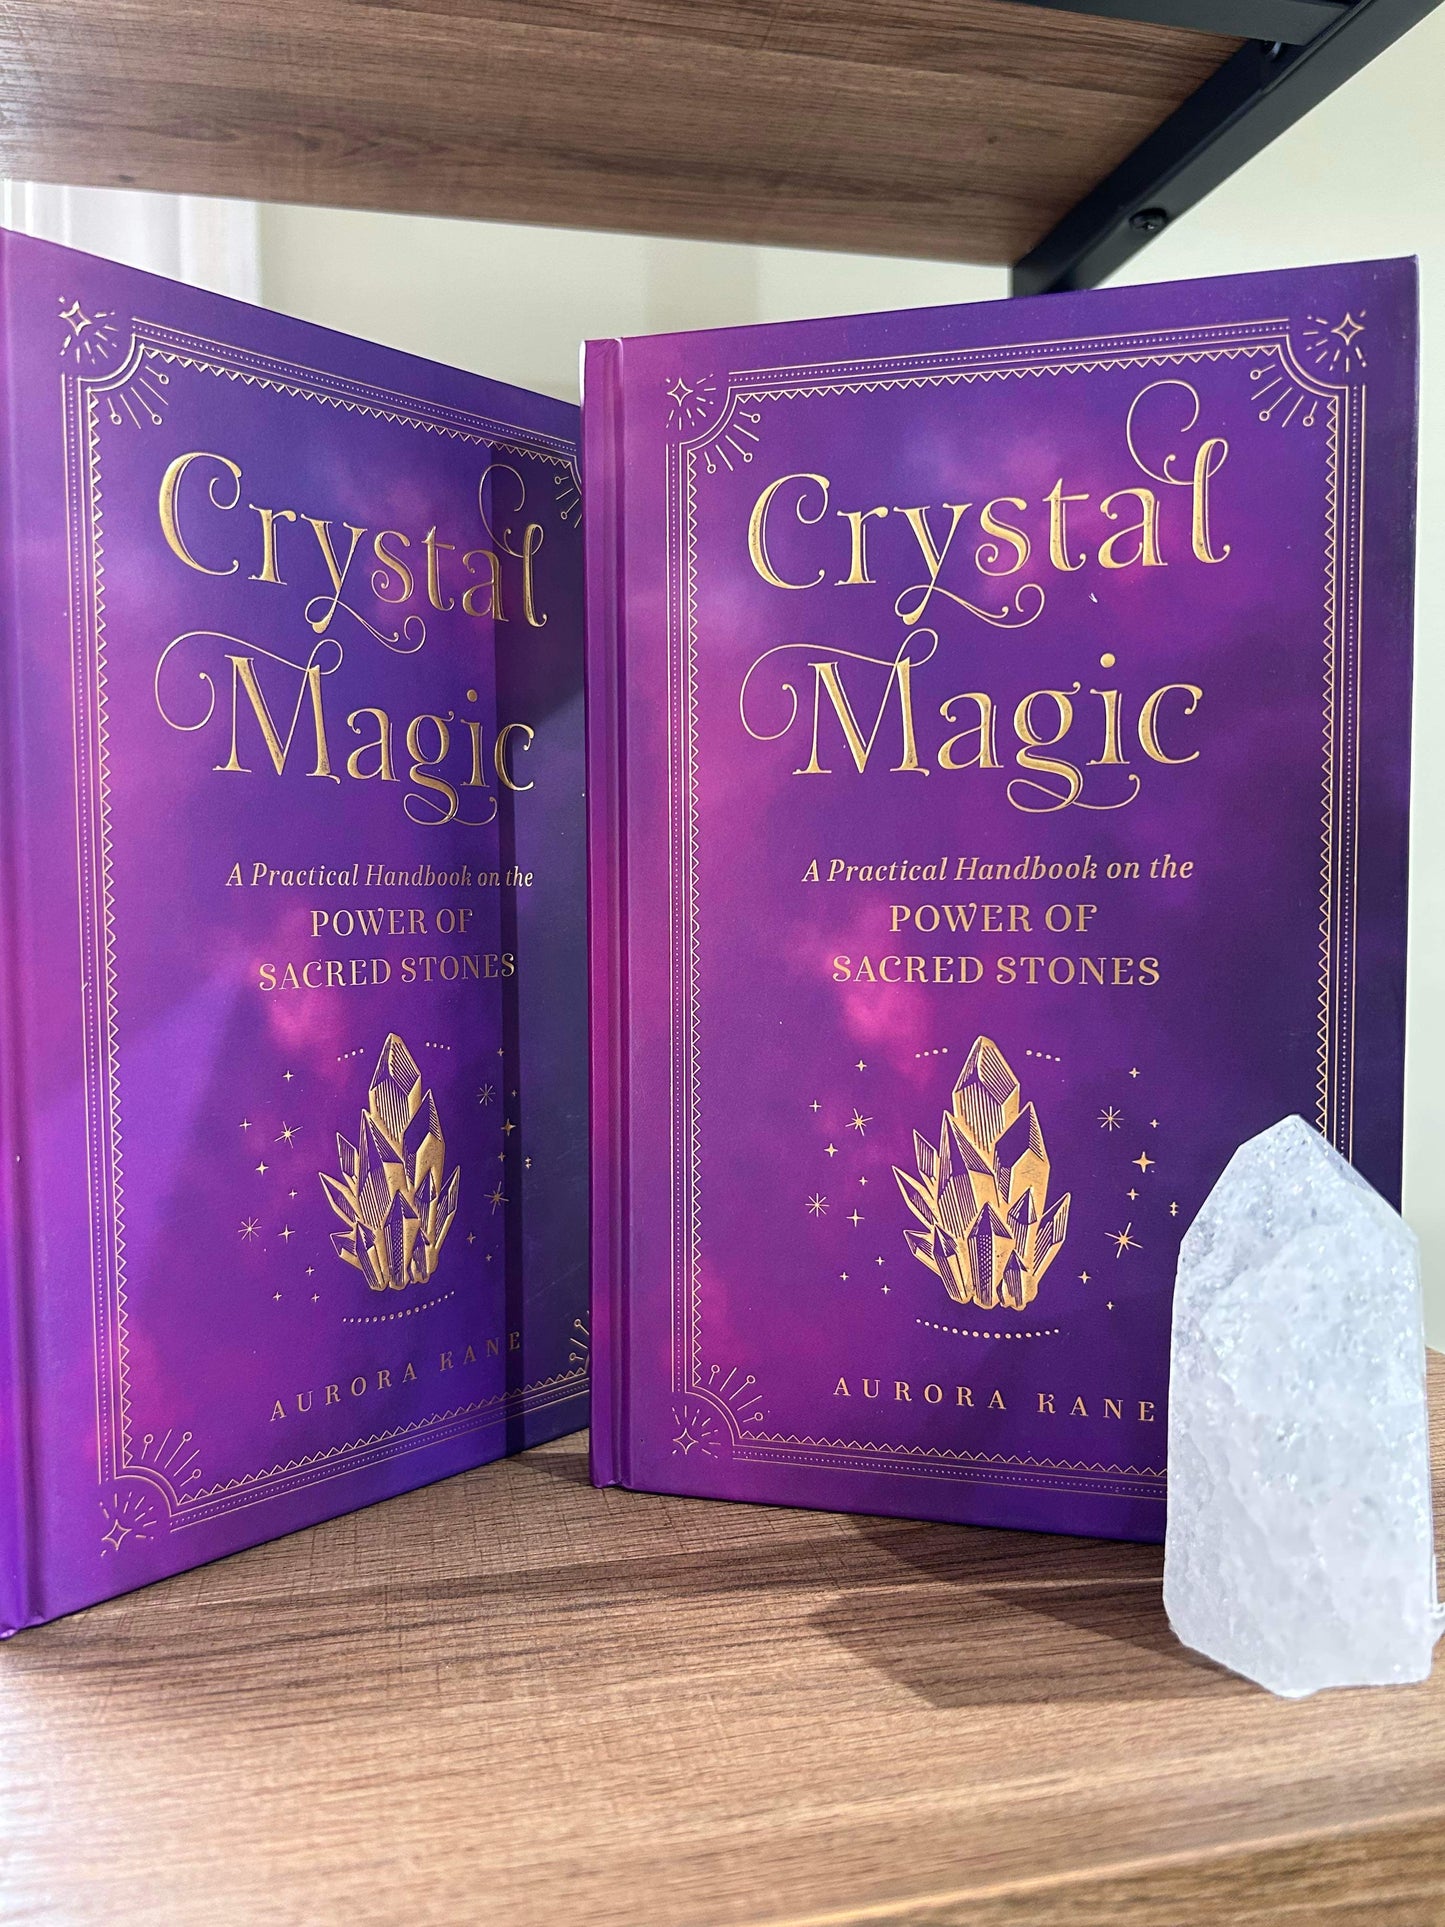 Crystal Magic by Aurora Kane